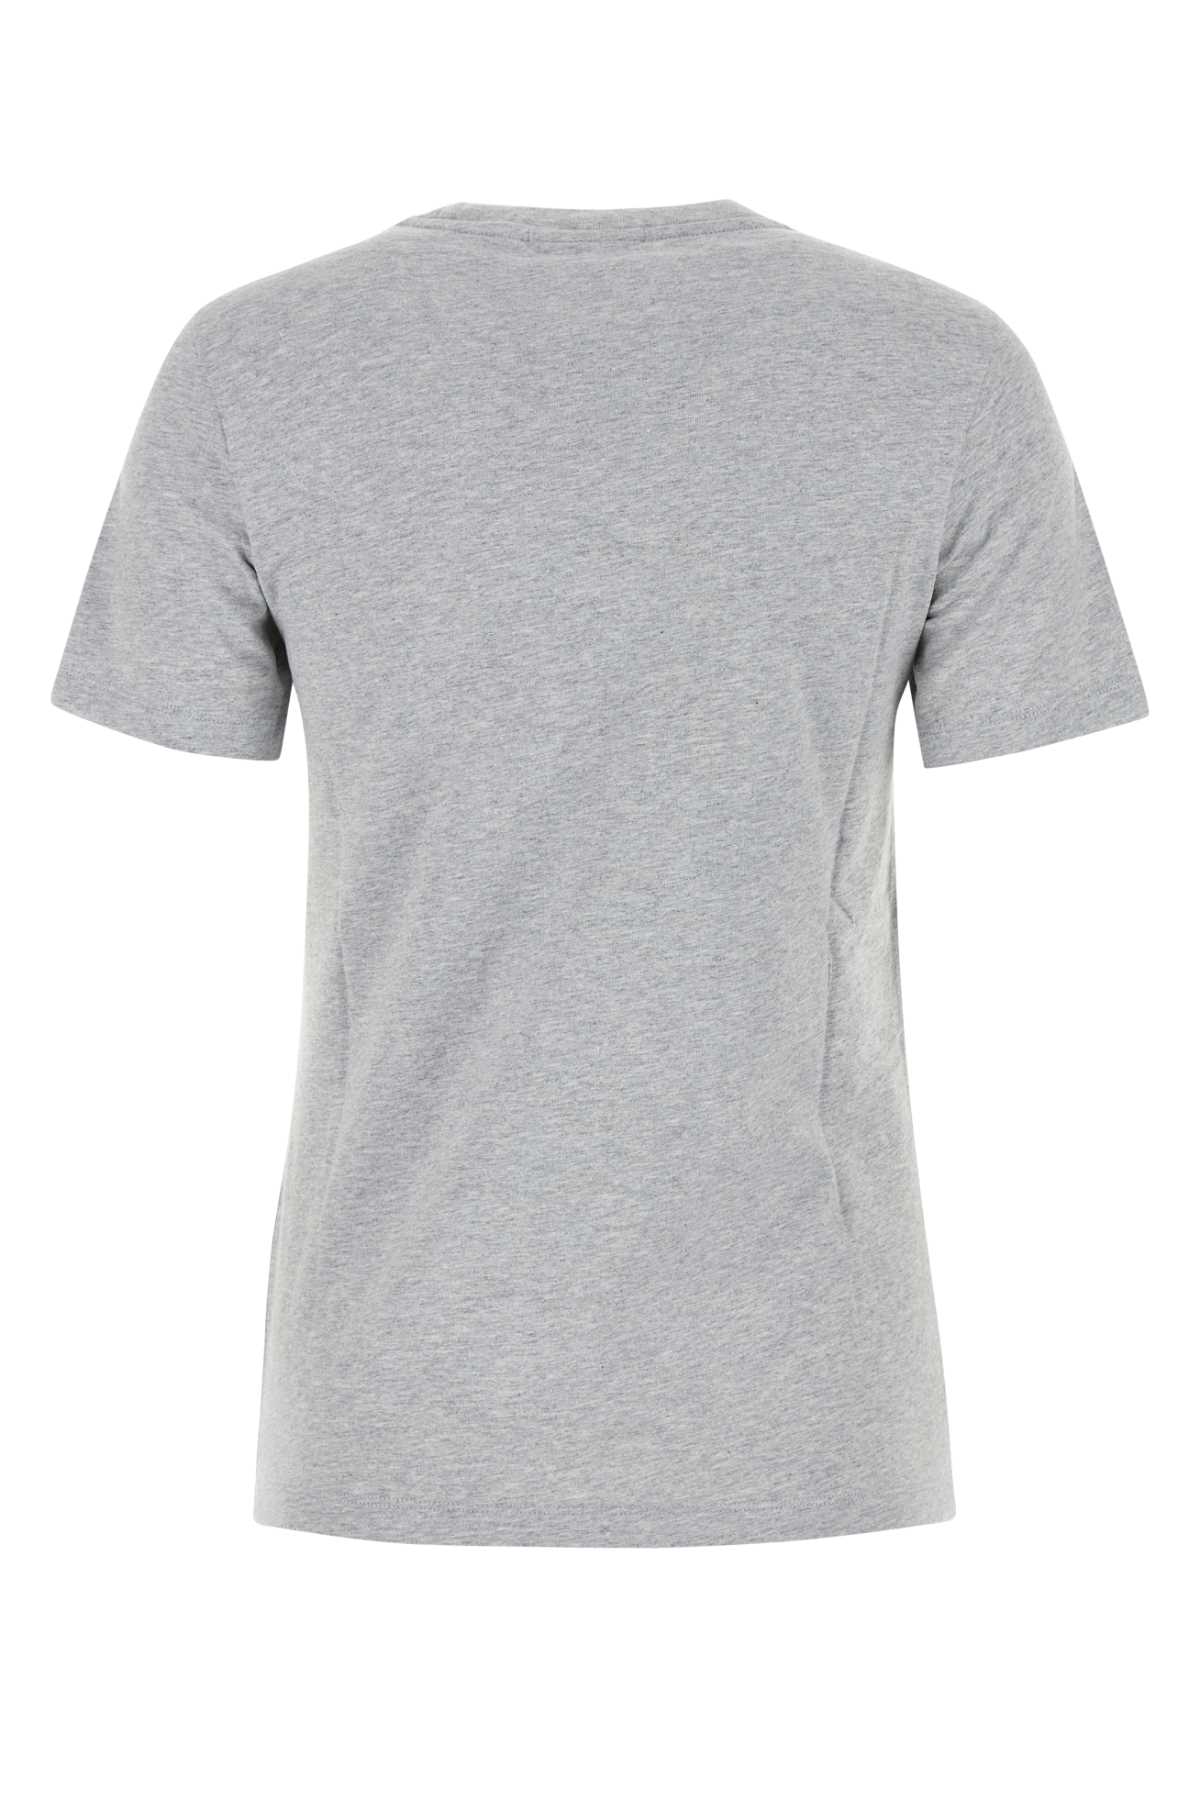 Maison Kitsuné Melange Grey Cotton T-shirt In Lightgreymelange